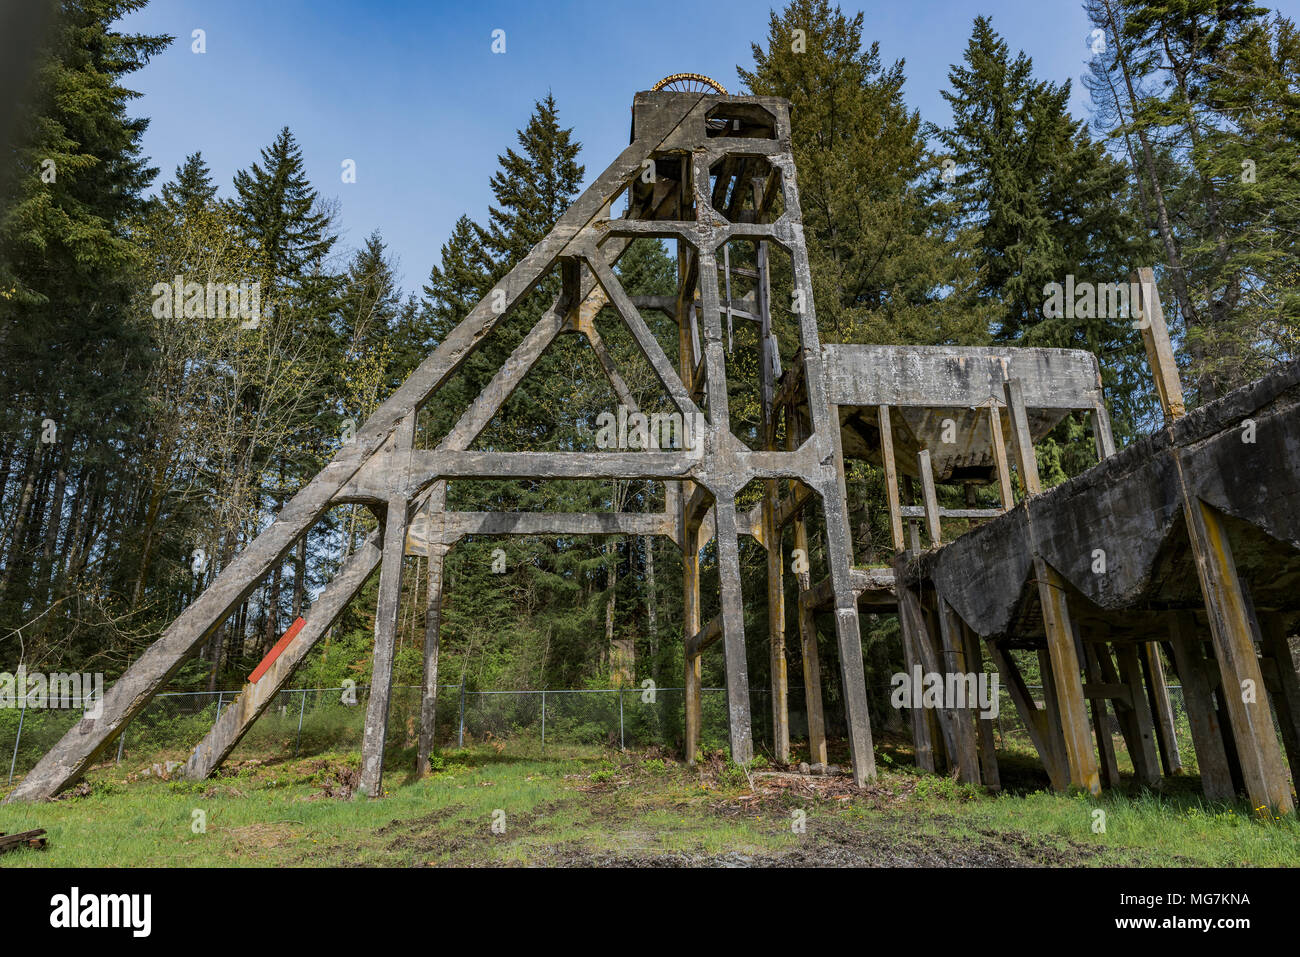 Mine remnants, Morden Colliery Historic Provincial Park, Nanaimo Regional Districy, British Columbia, Canada. Stock Photo